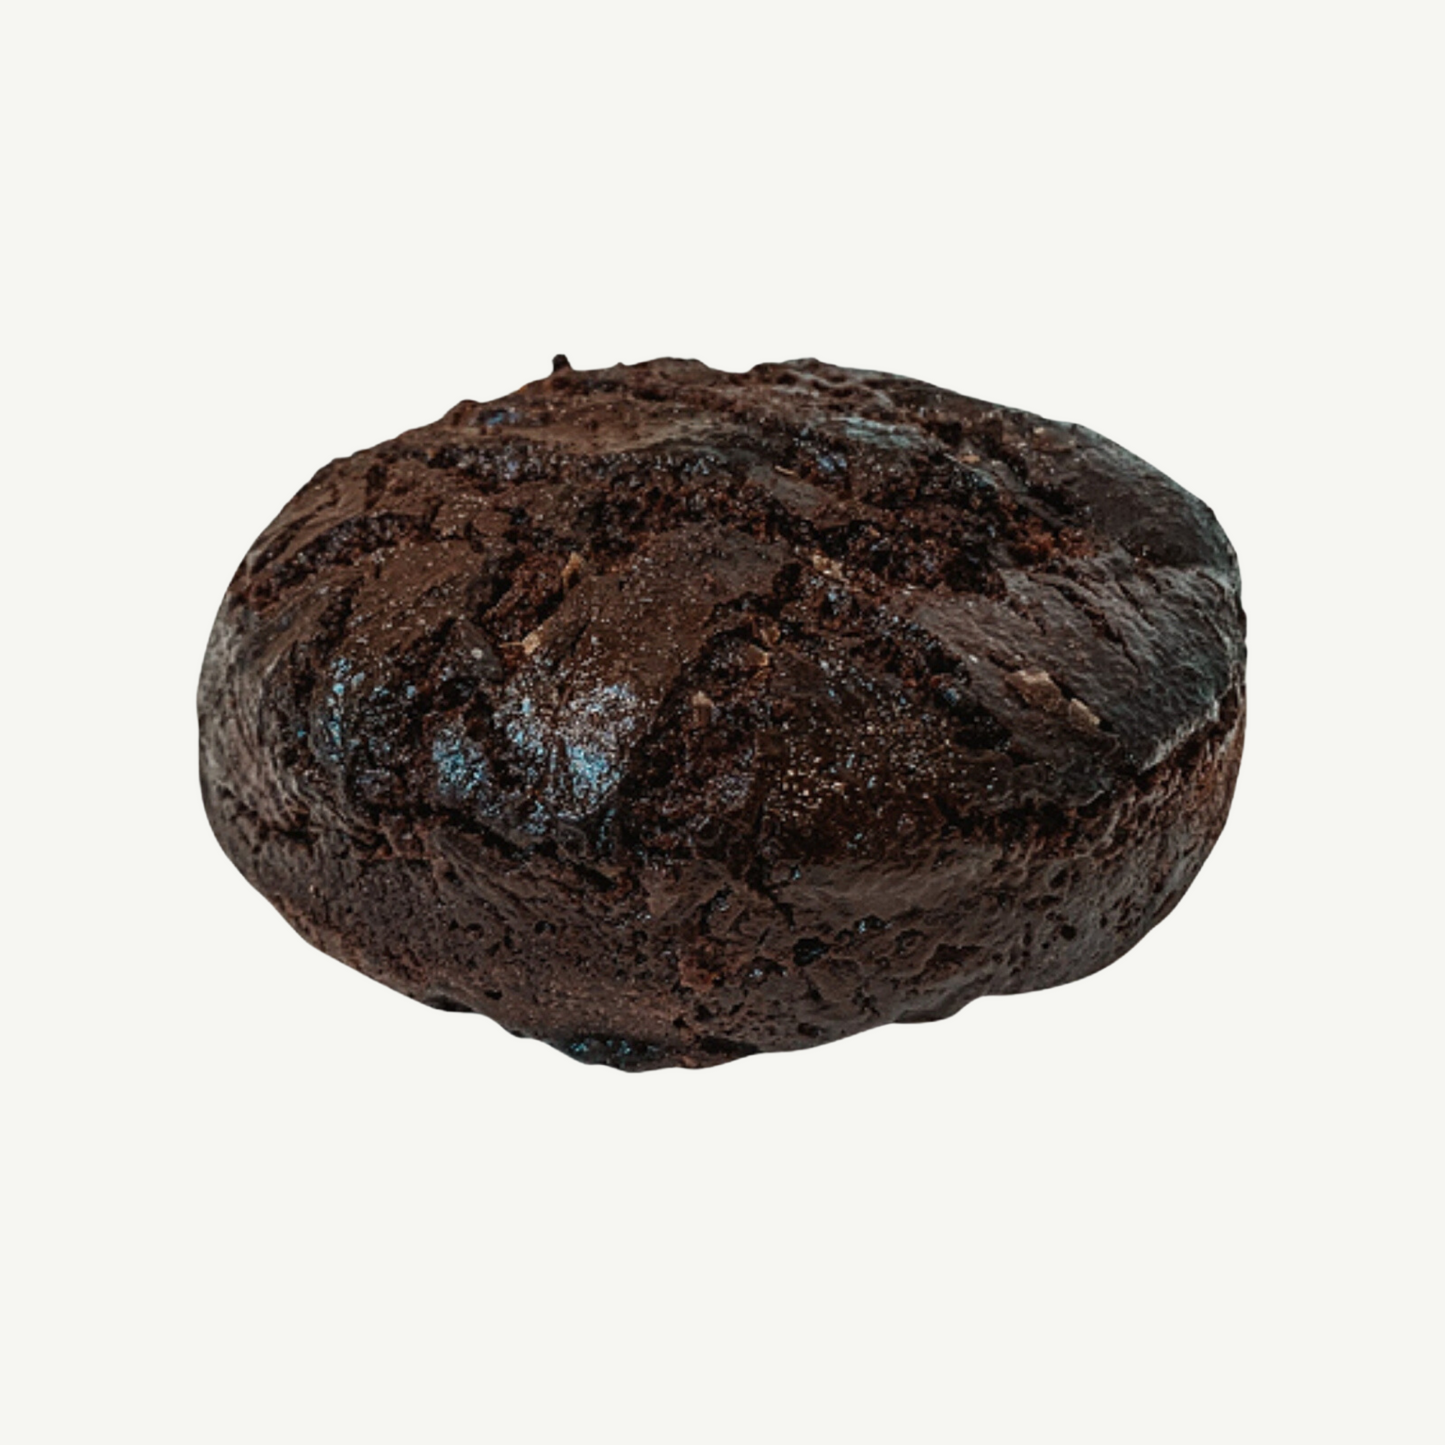 Chocolate Rolls (400g)